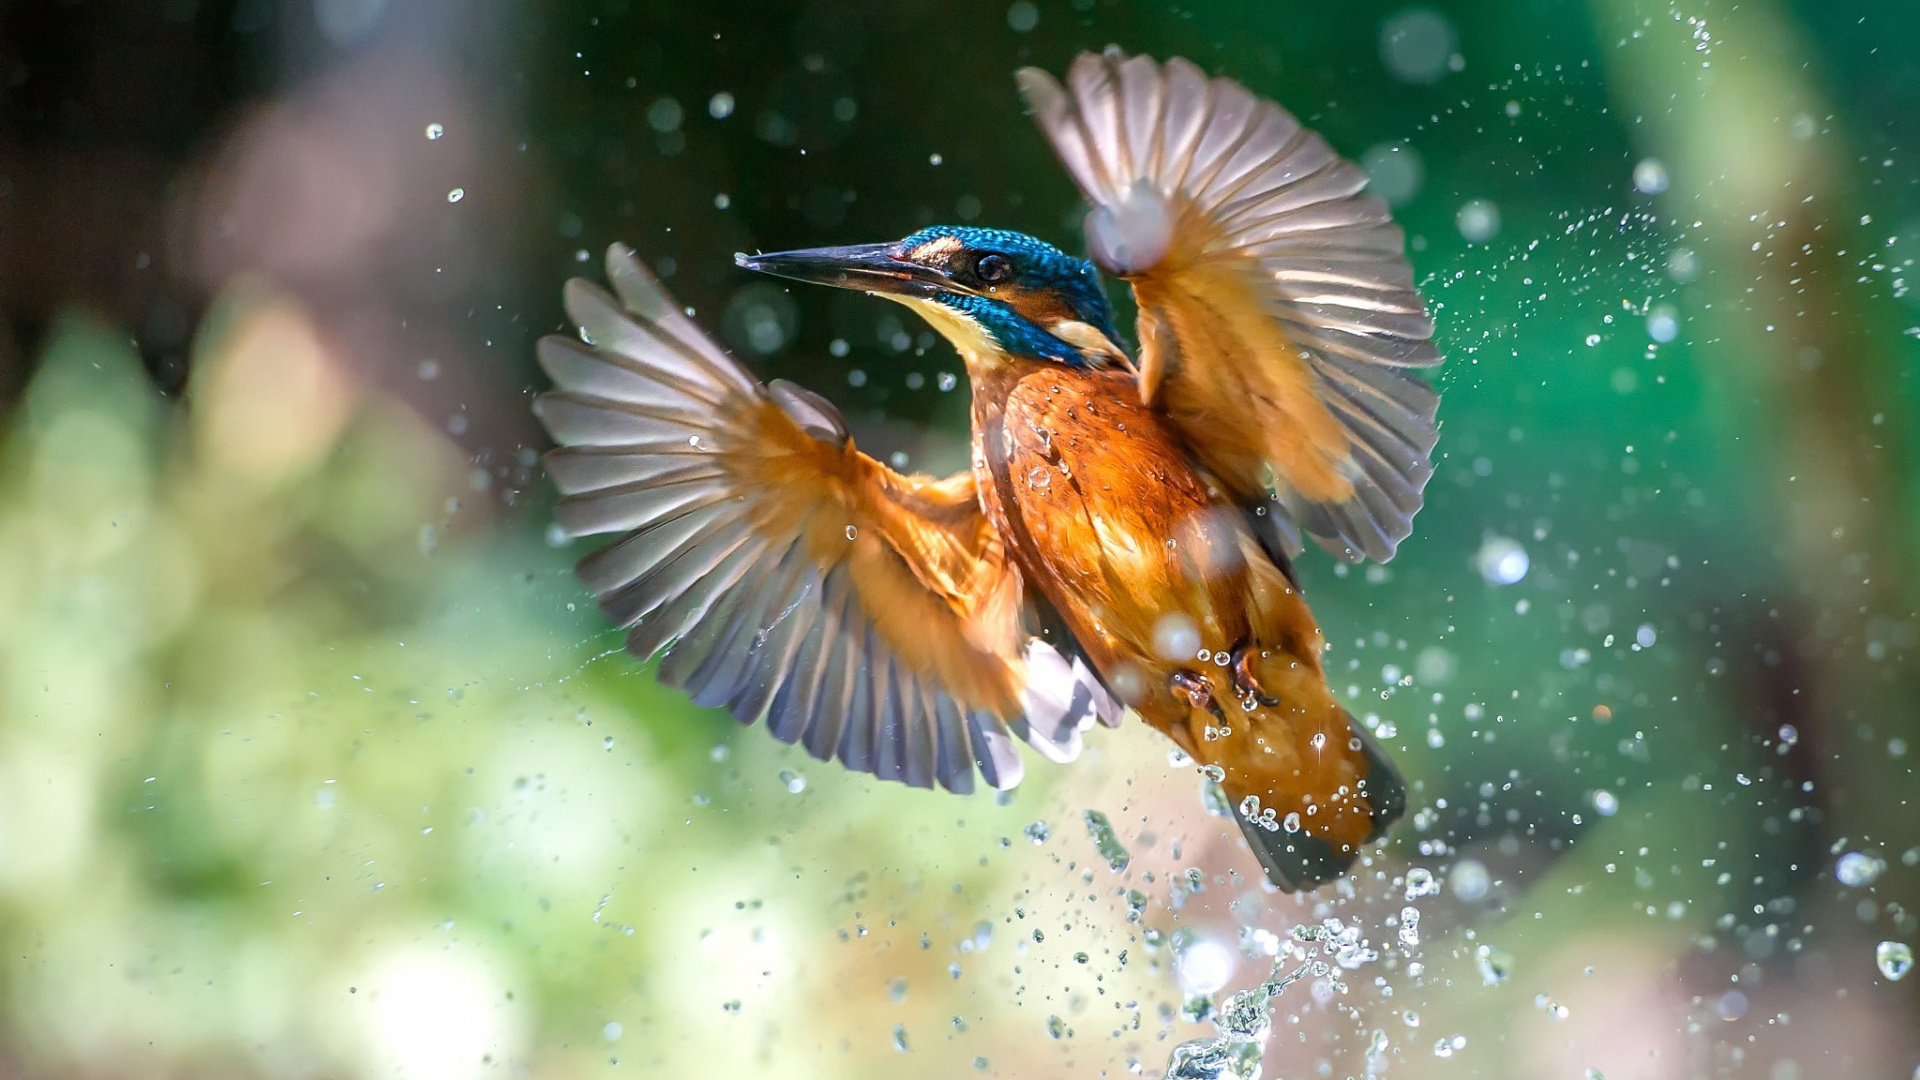 Downaload Bird, Flight, Water Splashes, Kingfisher - Kingfisher Bird Flying Hd , HD Wallpaper & Backgrounds